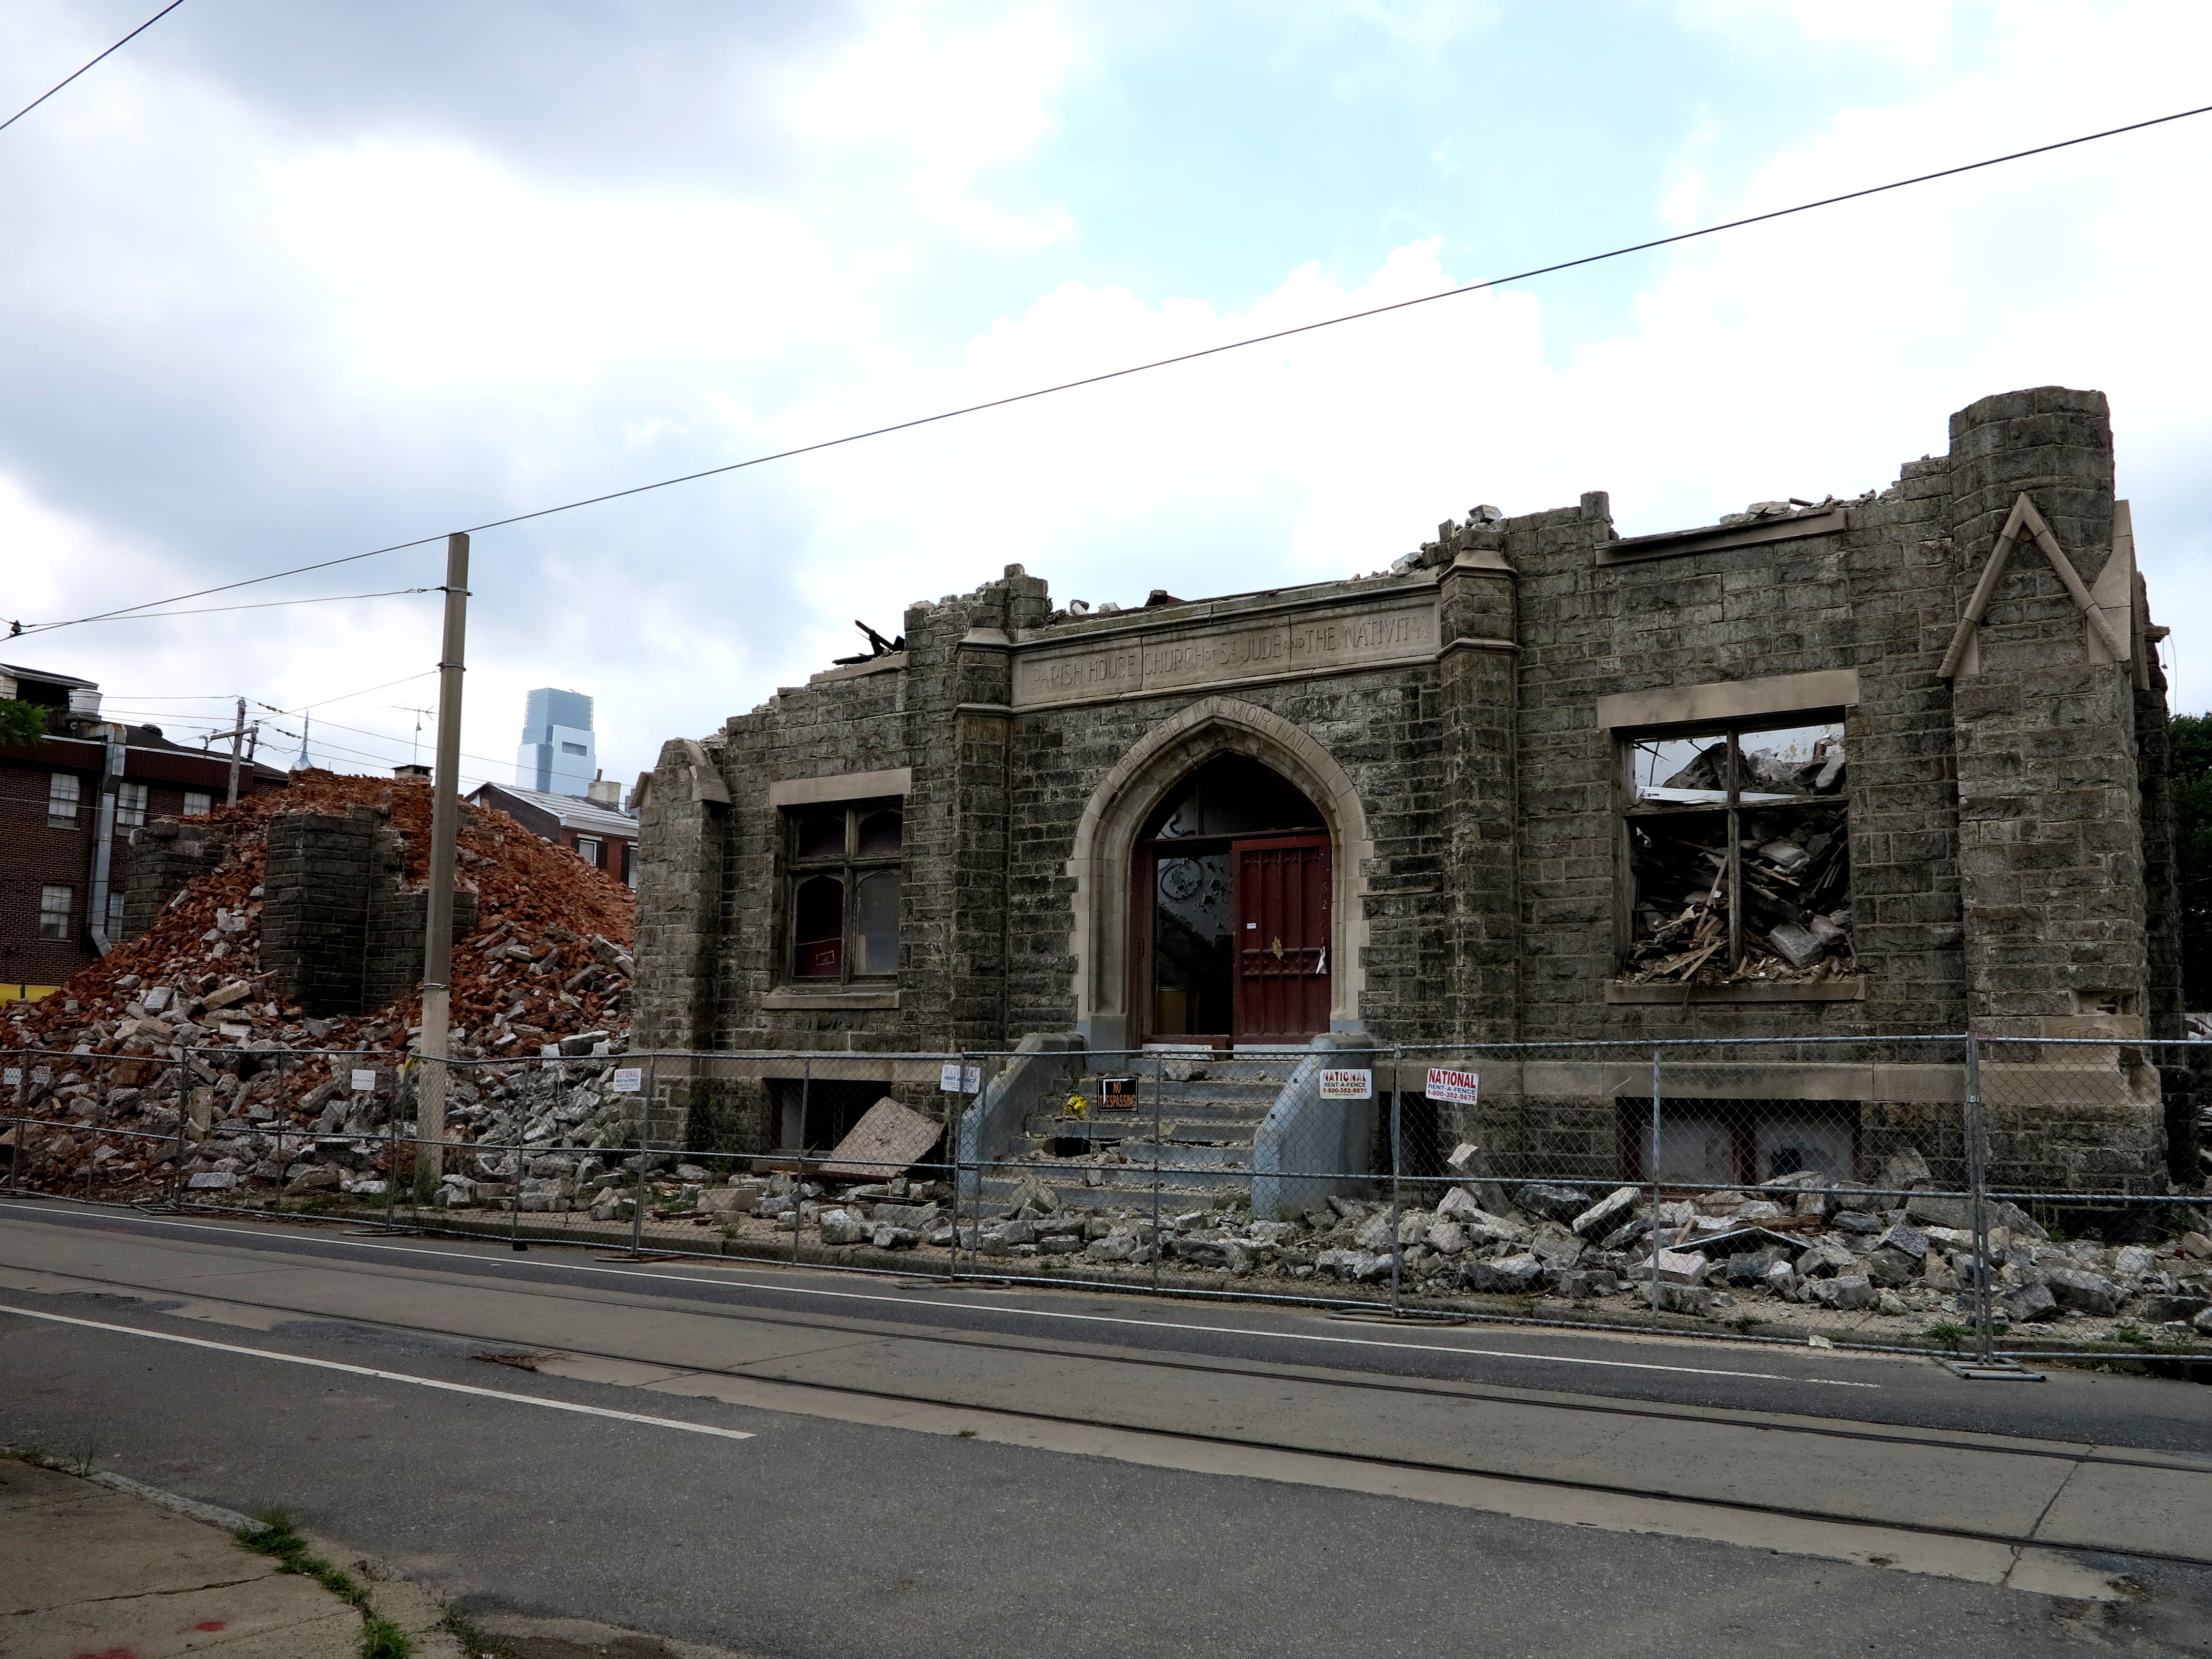 Ruffin Nichols Memorial AME demolition in progress, August 8, 2013